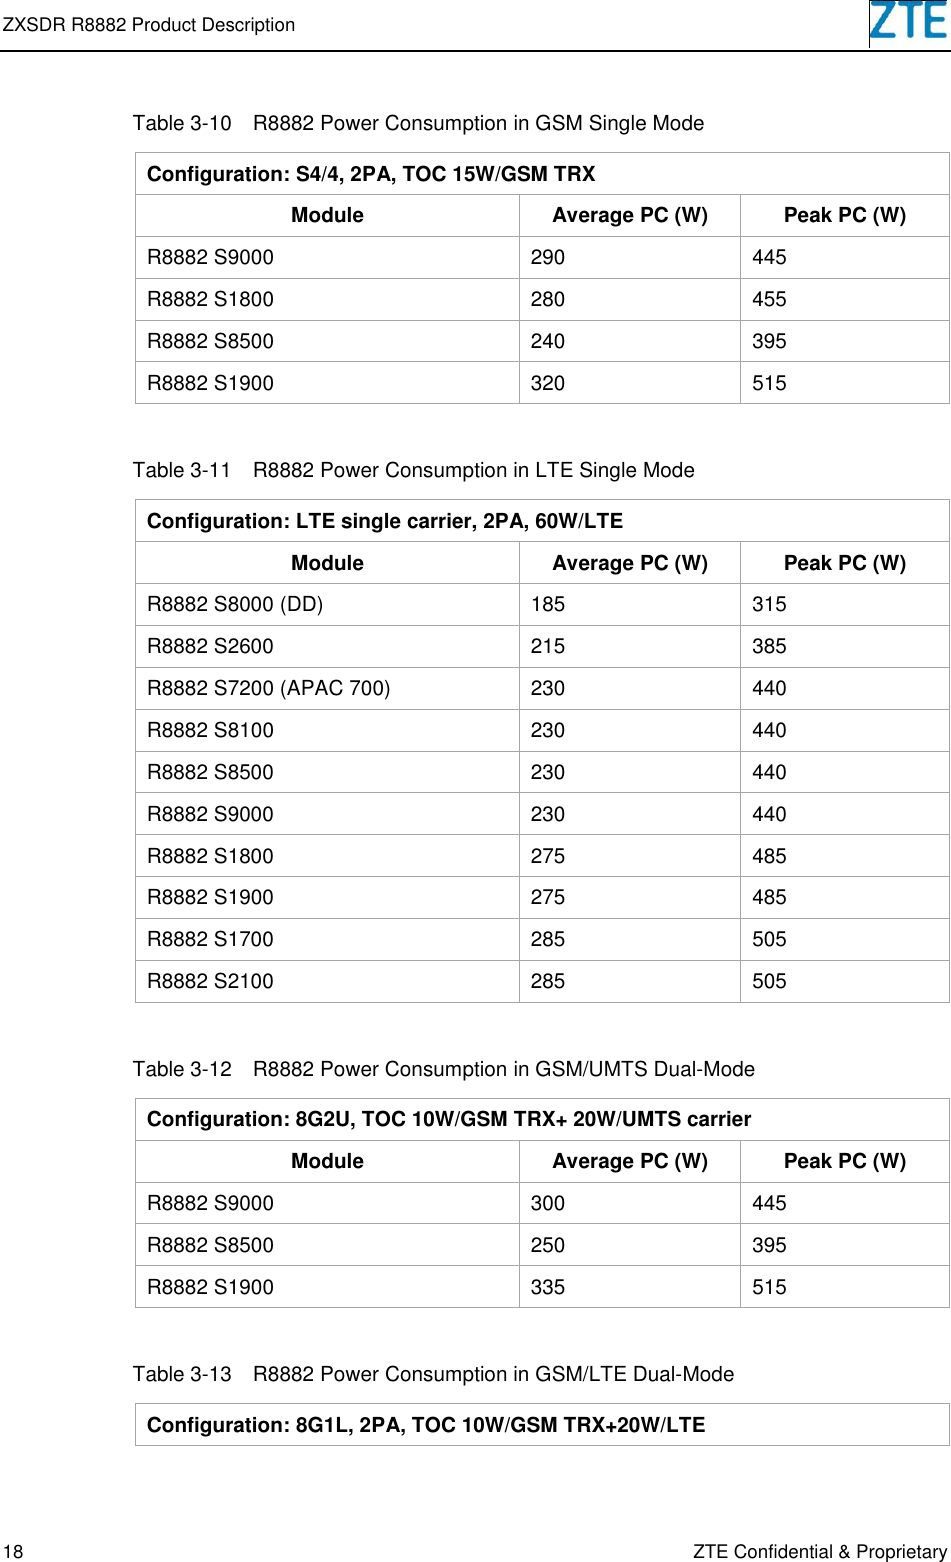 ZXSDR R8882 Product Description   18 ZTE Confidential &amp; Proprietary Table 3-10  R8882 Power Consumption in GSM Single Mode Configuration: S4/4, 2PA, TOC 15W/GSM TRX Module Average PC (W) Peak PC (W) R8882 S9000 290 445 R8882 S1800 280 455 R8882 S8500 240 395 R8882 S1900 320 515 Table 3-11  R8882 Power Consumption in LTE Single Mode Configuration: LTE single carrier, 2PA, 60W/LTE Module Average PC (W) Peak PC (W) R8882 S8000 (DD) 185 315 R8882 S2600 215 385 R8882 S7200 (APAC 700) 230 440 R8882 S8100 230 440 R8882 S8500 230 440 R8882 S9000 230 440 R8882 S1800 275 485 R8882 S1900 275 485 R8882 S1700 285 505 R8882 S2100 285 505 Table 3-12  R8882 Power Consumption in GSM/UMTS Dual-Mode Configuration: 8G2U, TOC 10W/GSM TRX+ 20W/UMTS carrier Module Average PC (W) Peak PC (W) R8882 S9000 300 445 R8882 S8500 250 395 R8882 S1900 335 515 Table 3-13  R8882 Power Consumption in GSM/LTE Dual-Mode Configuration: 8G1L, 2PA, TOC 10W/GSM TRX+20W/LTE 